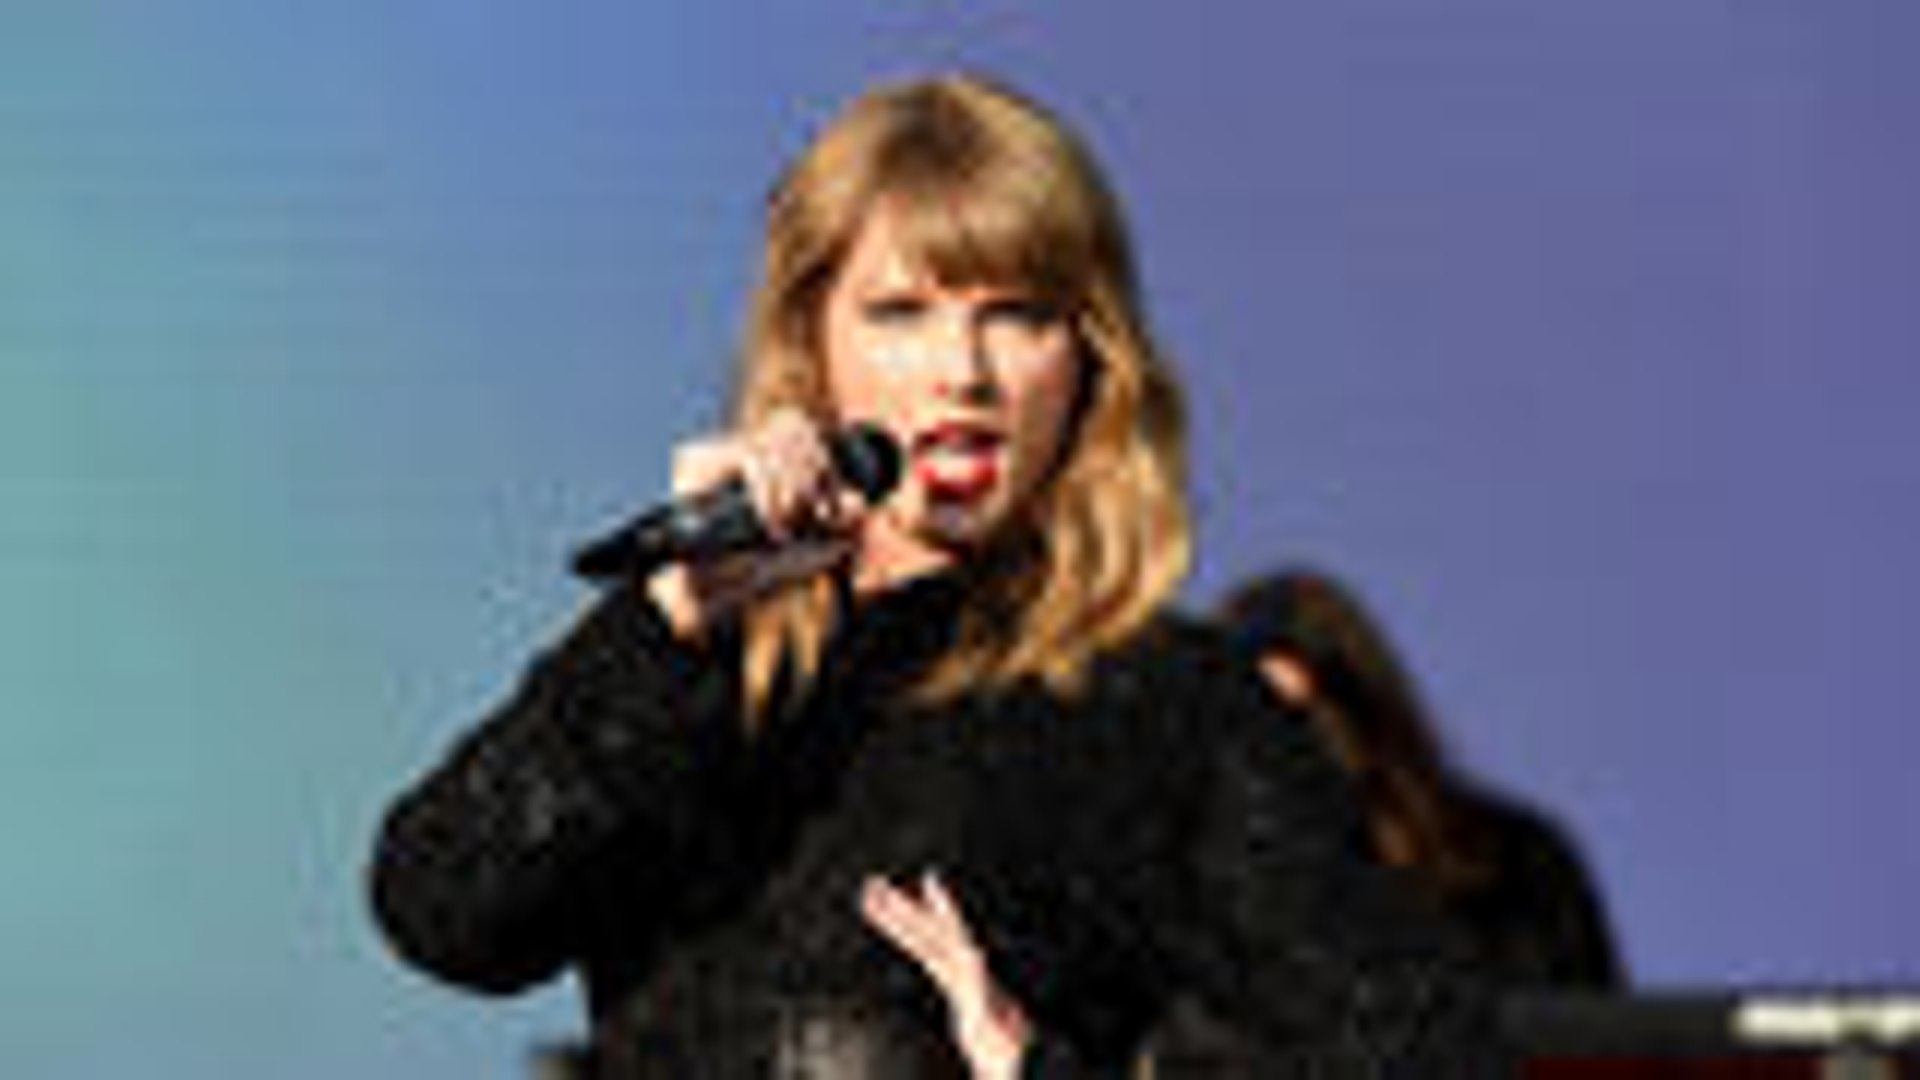 Taylor Swift Re-Enters Billboard's Social 50 Chart Thanks to Tweets | Billboard News